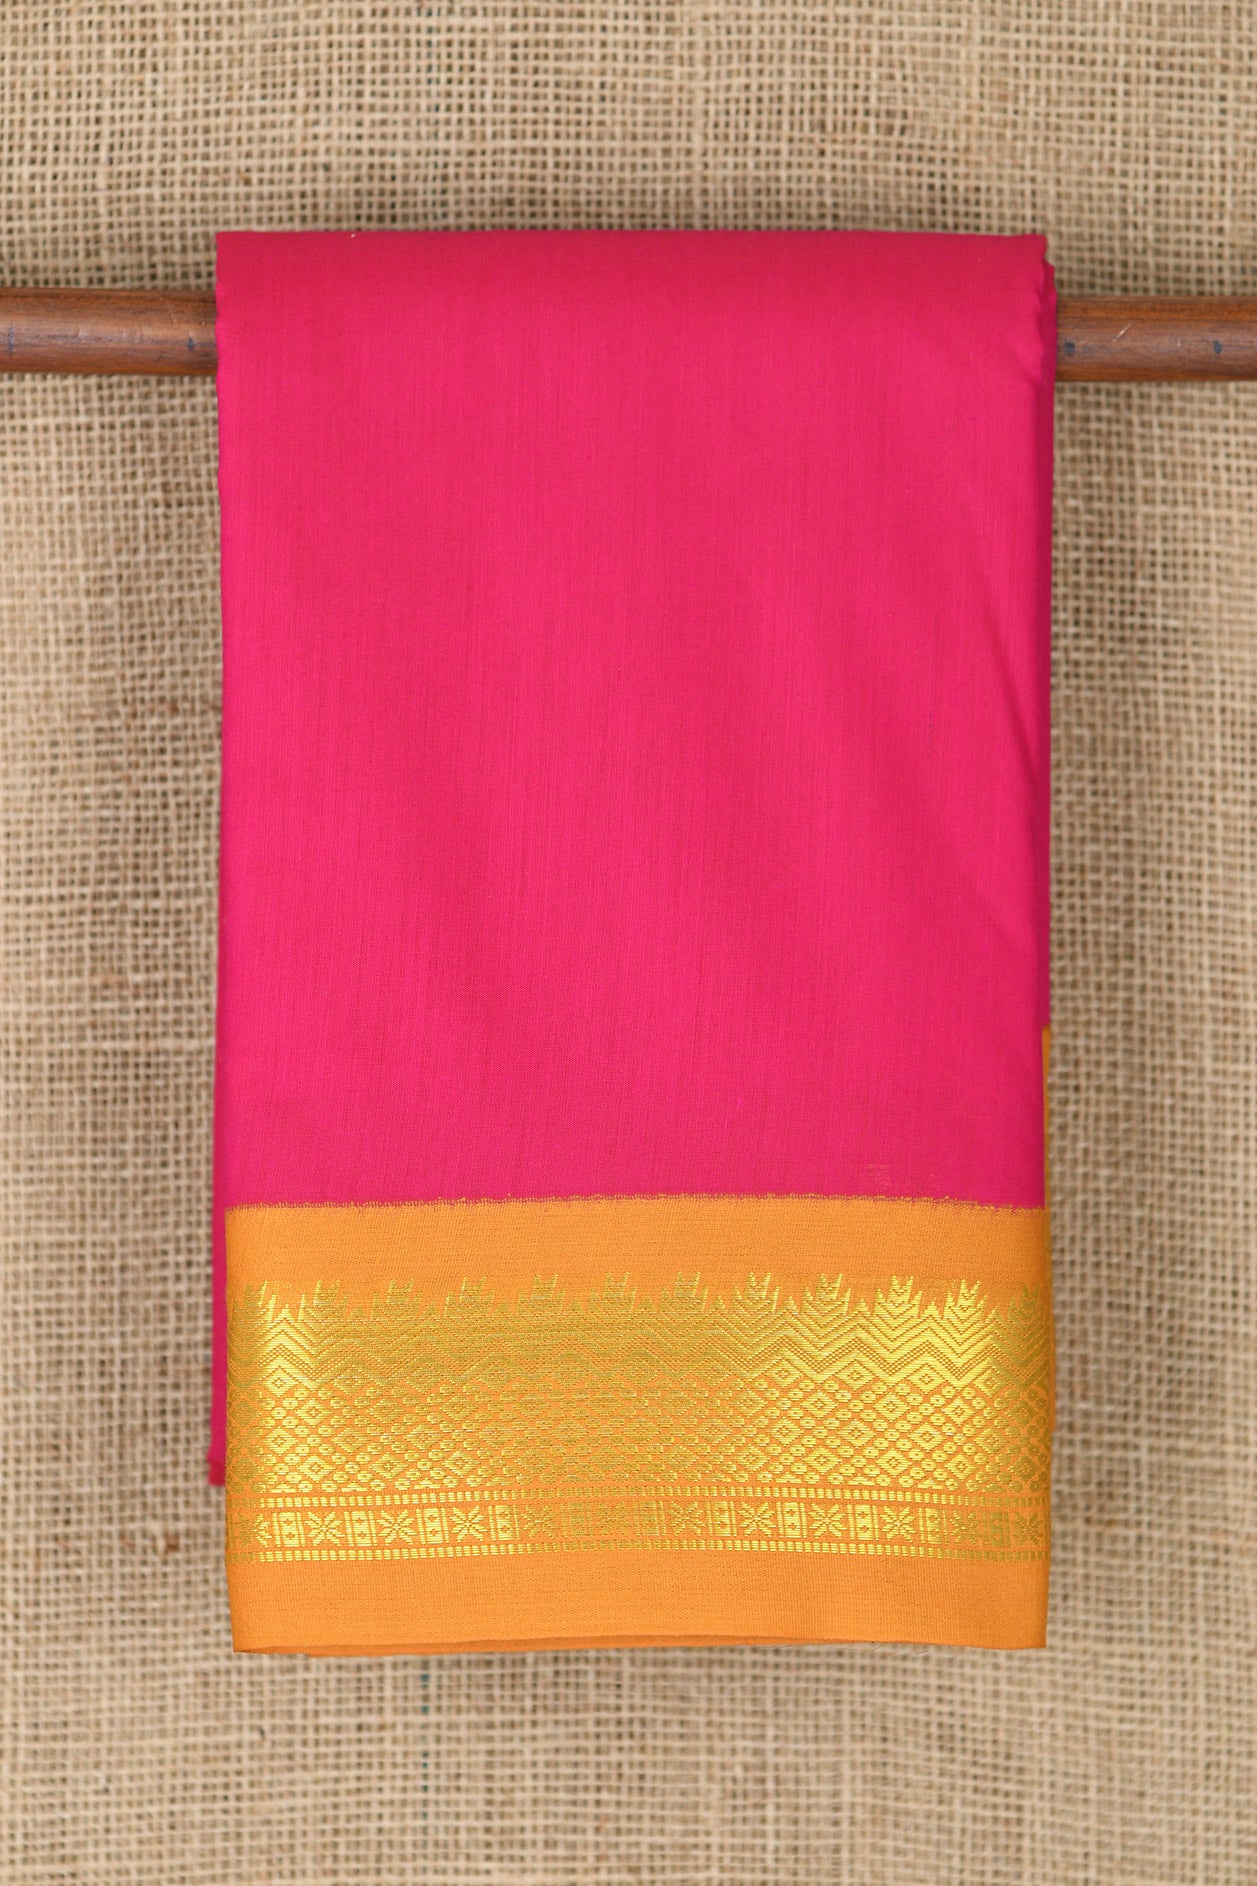 Contrast Temple Zari Border In Plain Hot Pink Apoorva Cotton Saree